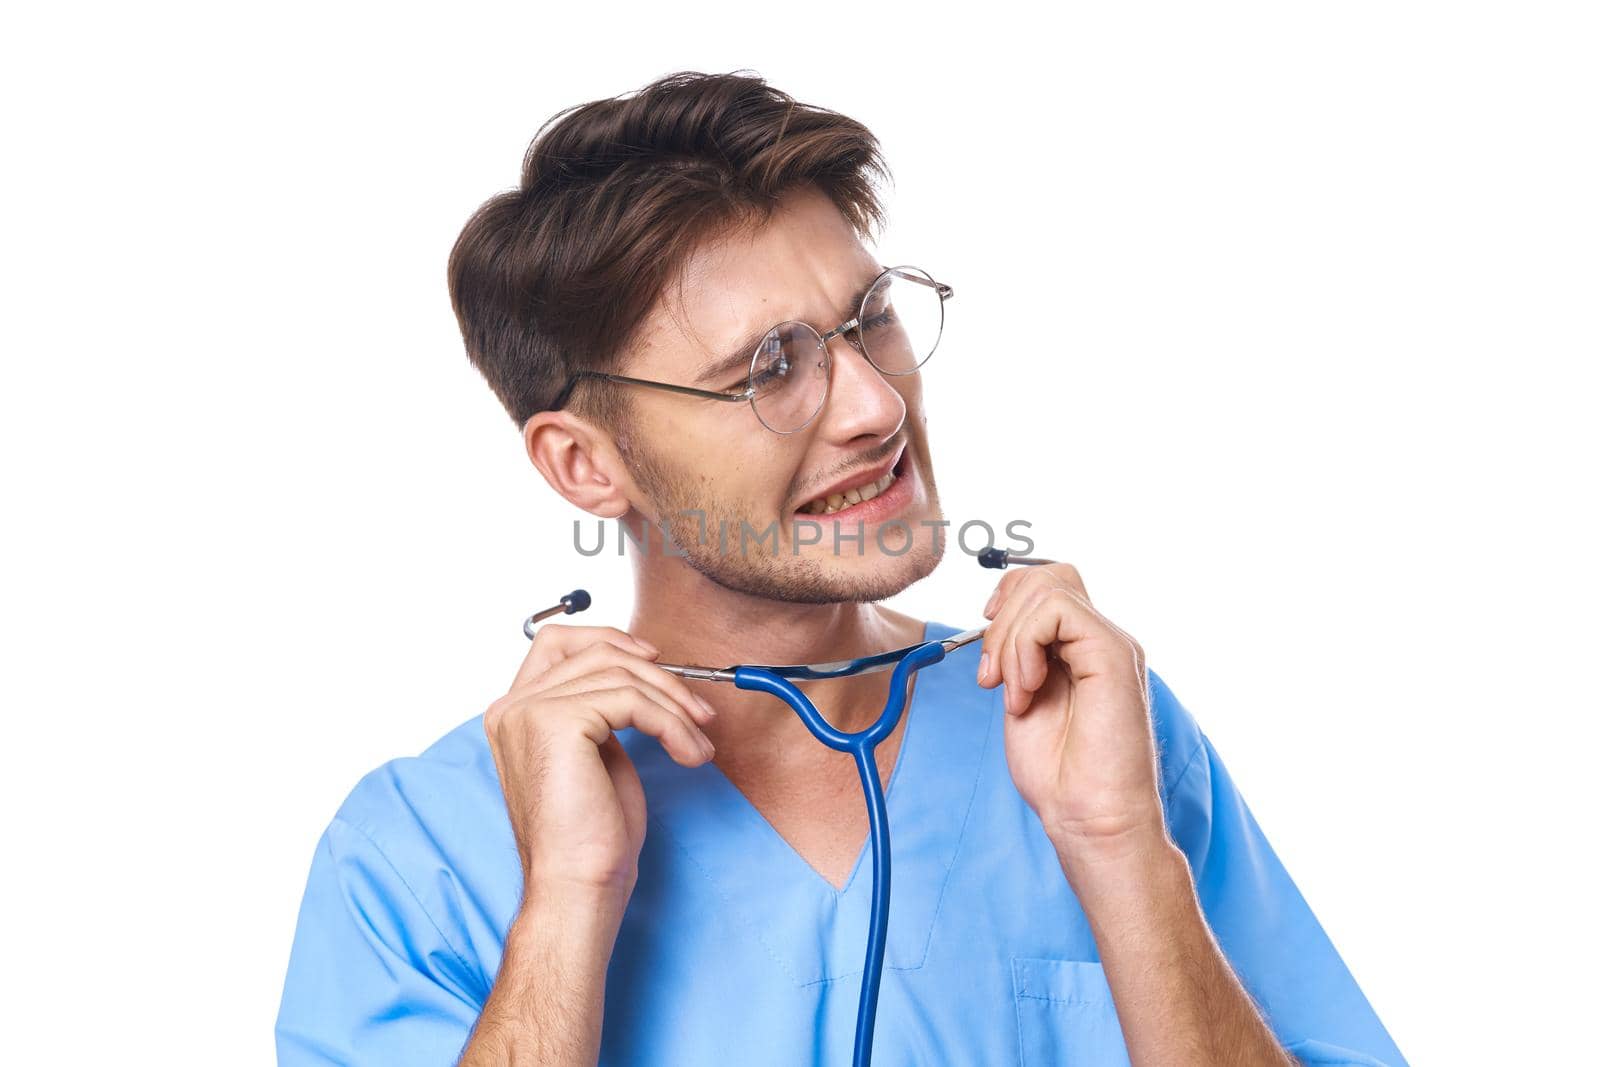 man in medical uniform health care treatment stethoscope examination studio lifestyle. High quality photo